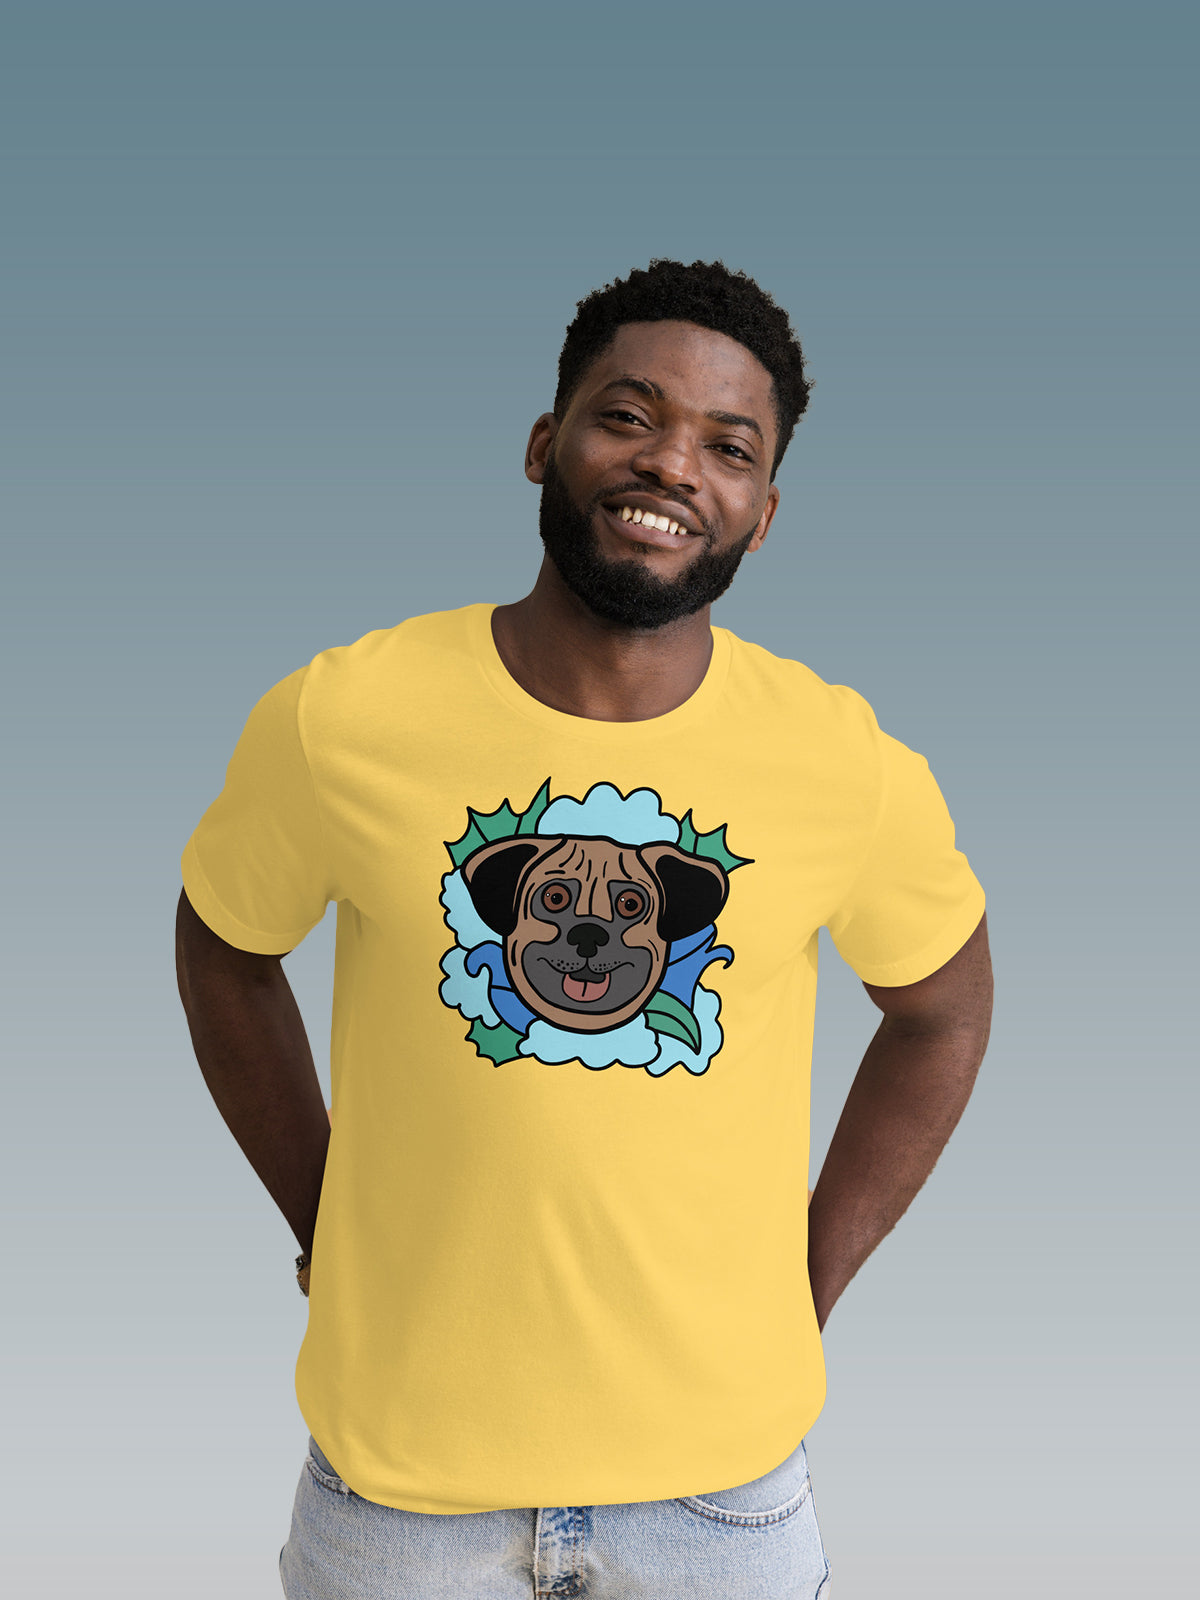 The Puggy T-shirt